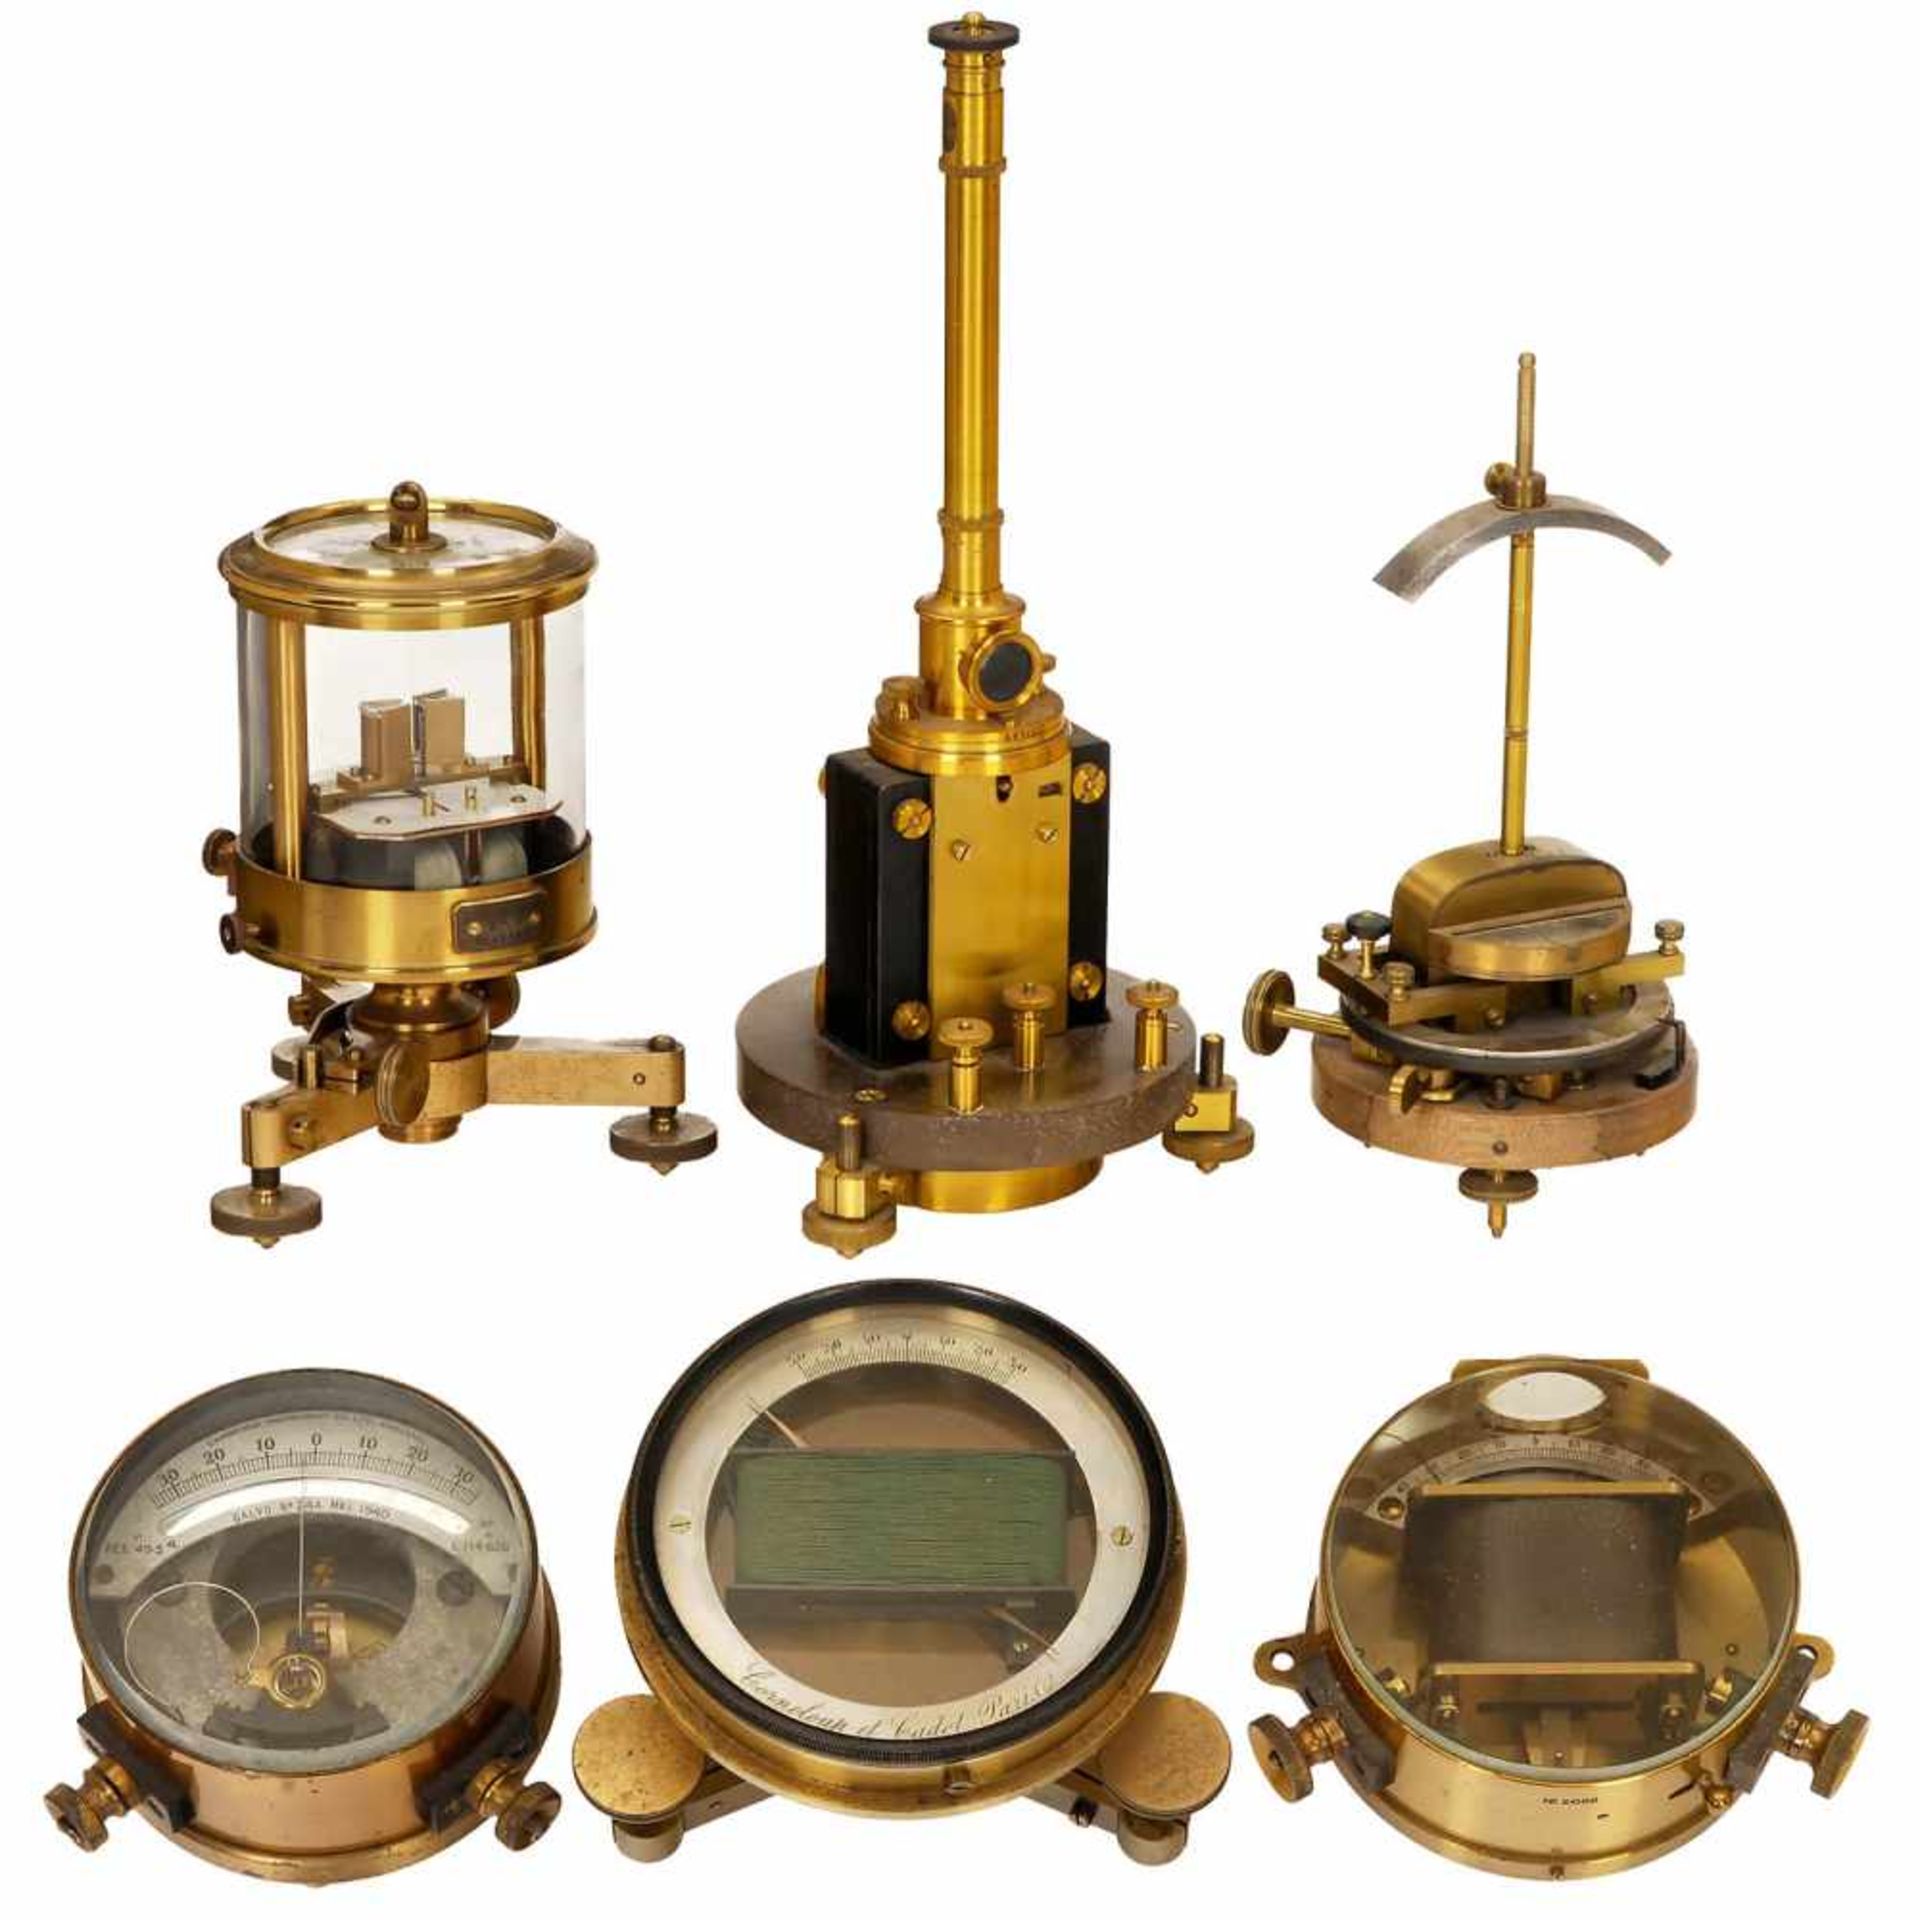 6 Galvanometers, c. 19001) Mirror galvanometer, 1897 onwards, no. 48916, manufactured by Siemens &